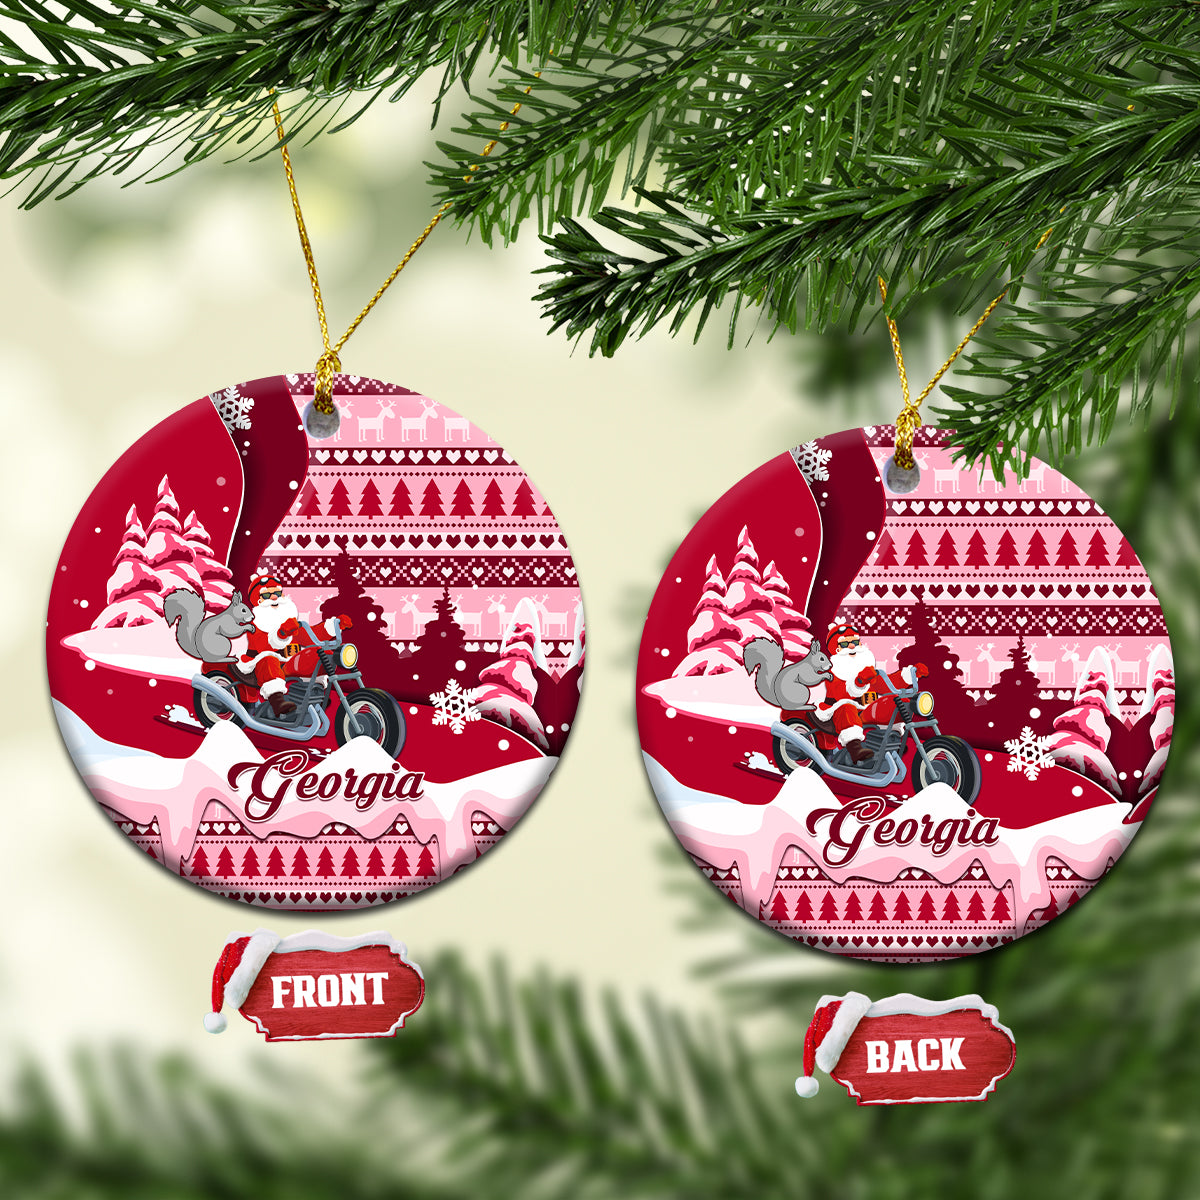 georgia-christmas-ceramic-ornament-santa-claus-riding-motorcycle-with-gray-squirrel